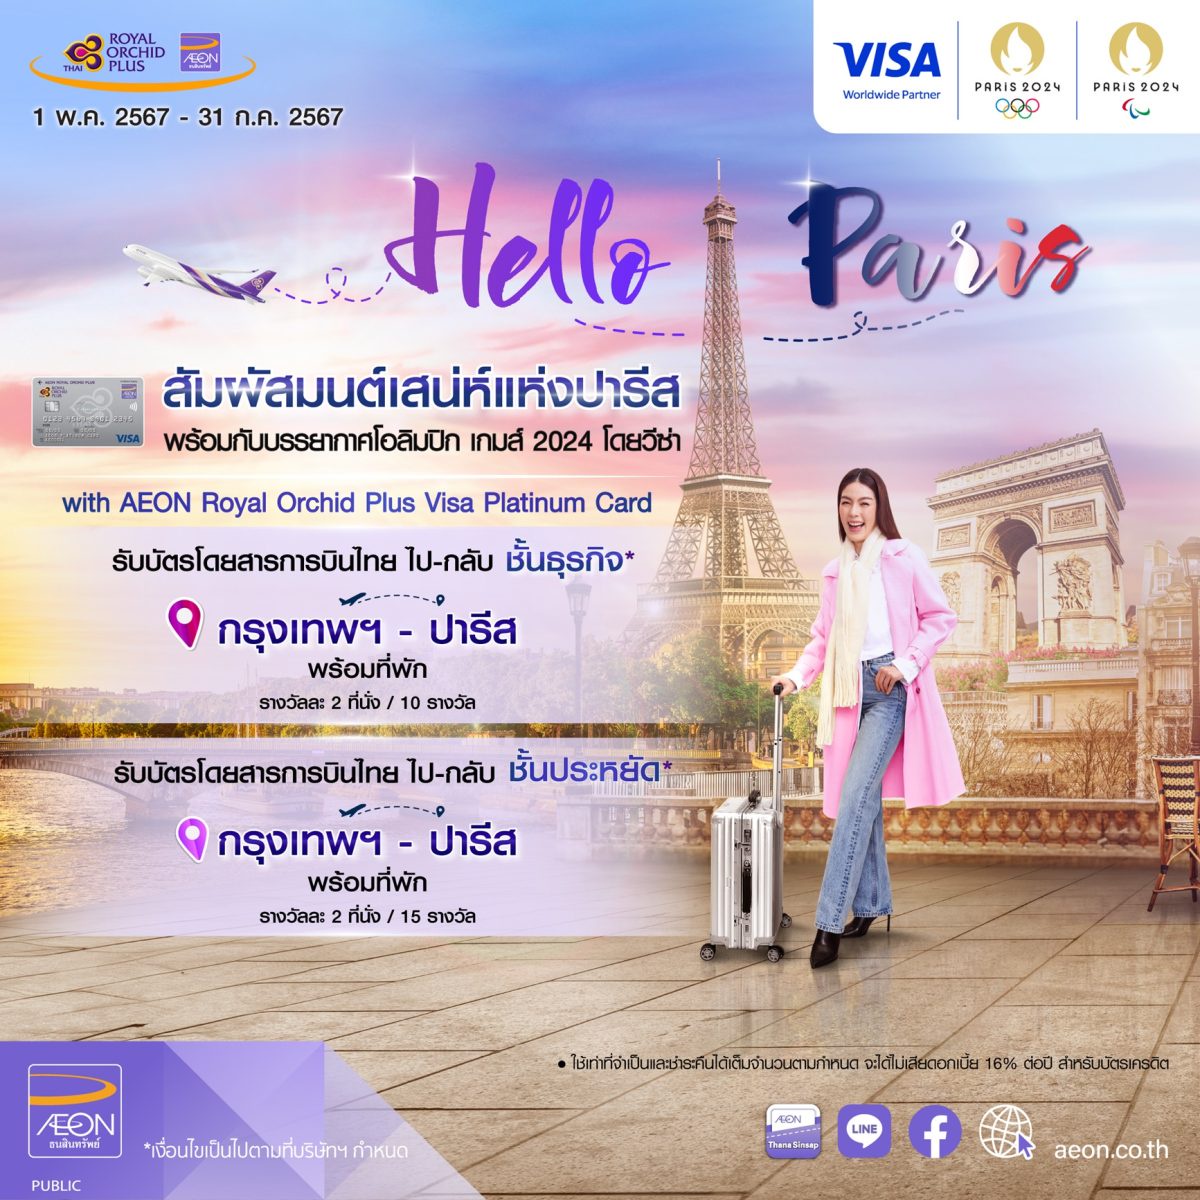 Hello Paris! City of Romance with AEON Royal Orchid Plus Visa Platinum Card